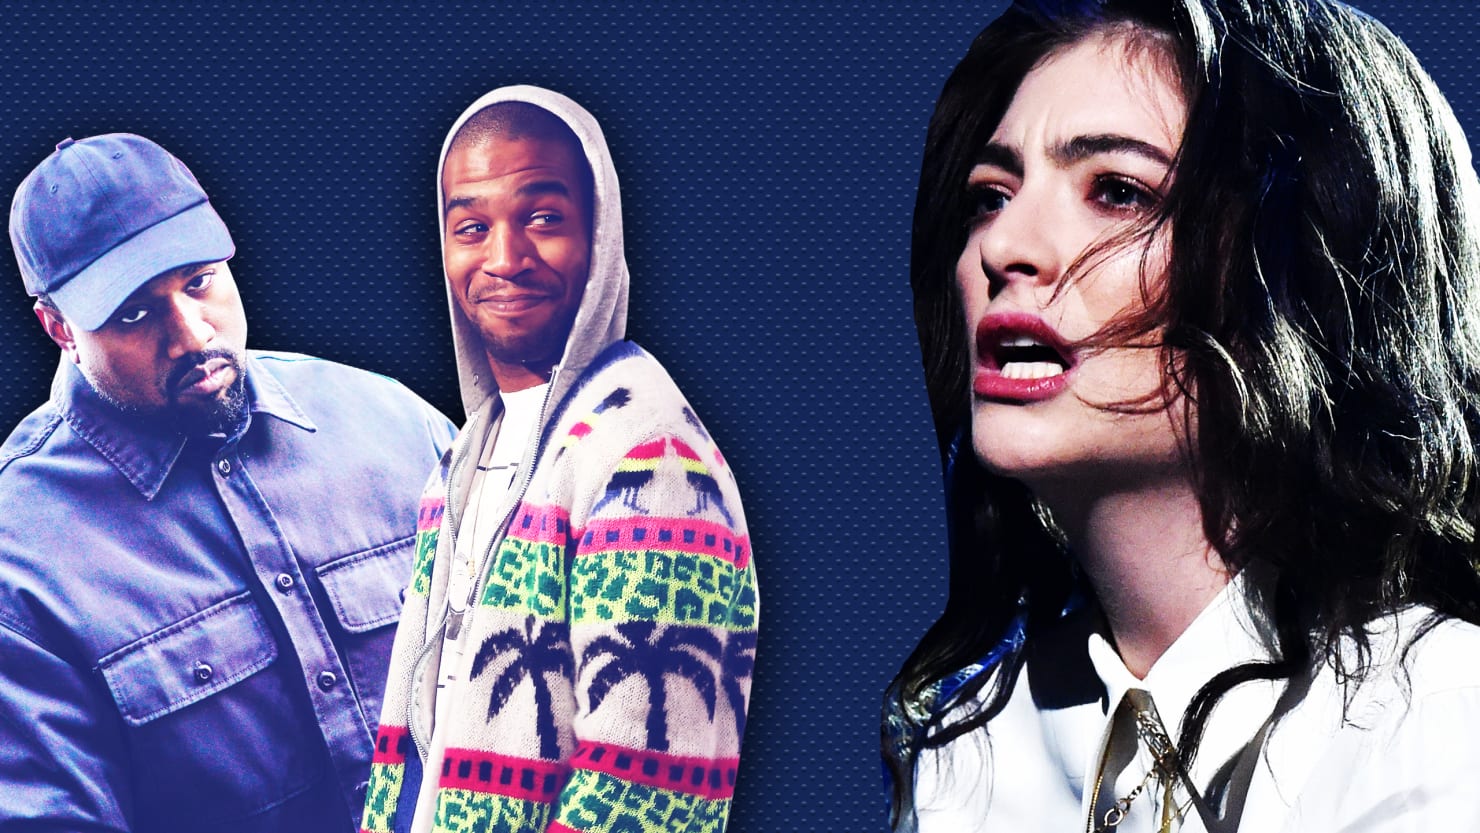 Lorde Breaks Social Media Silence to Blast Kanye West: ‘Don't Steal’ From Women